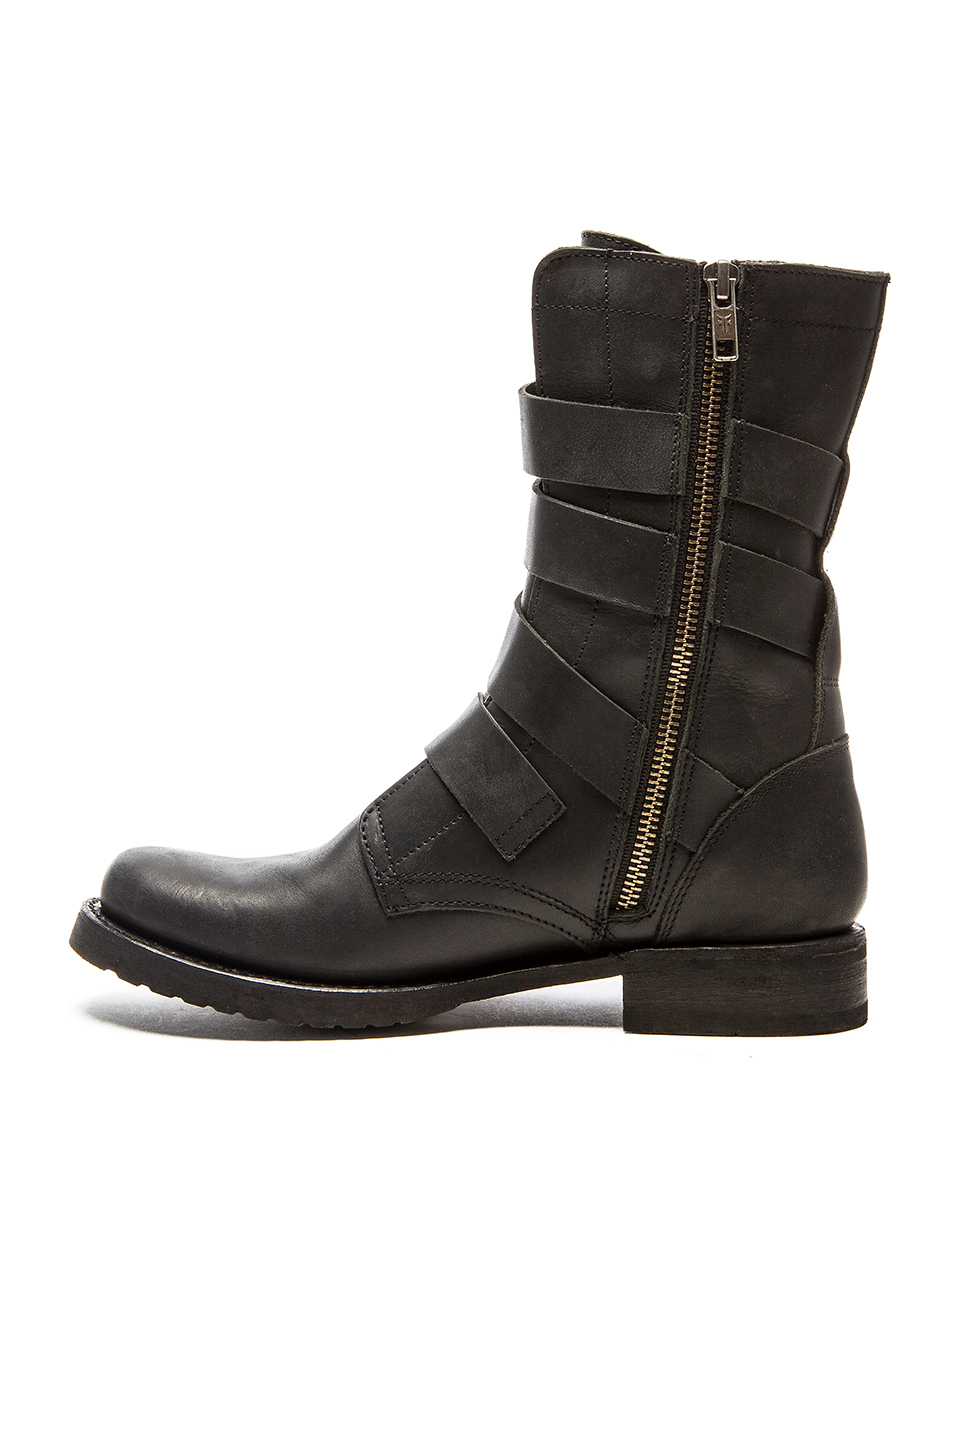 Frye Leather Veronica Tanker Boot in Black - Lyst